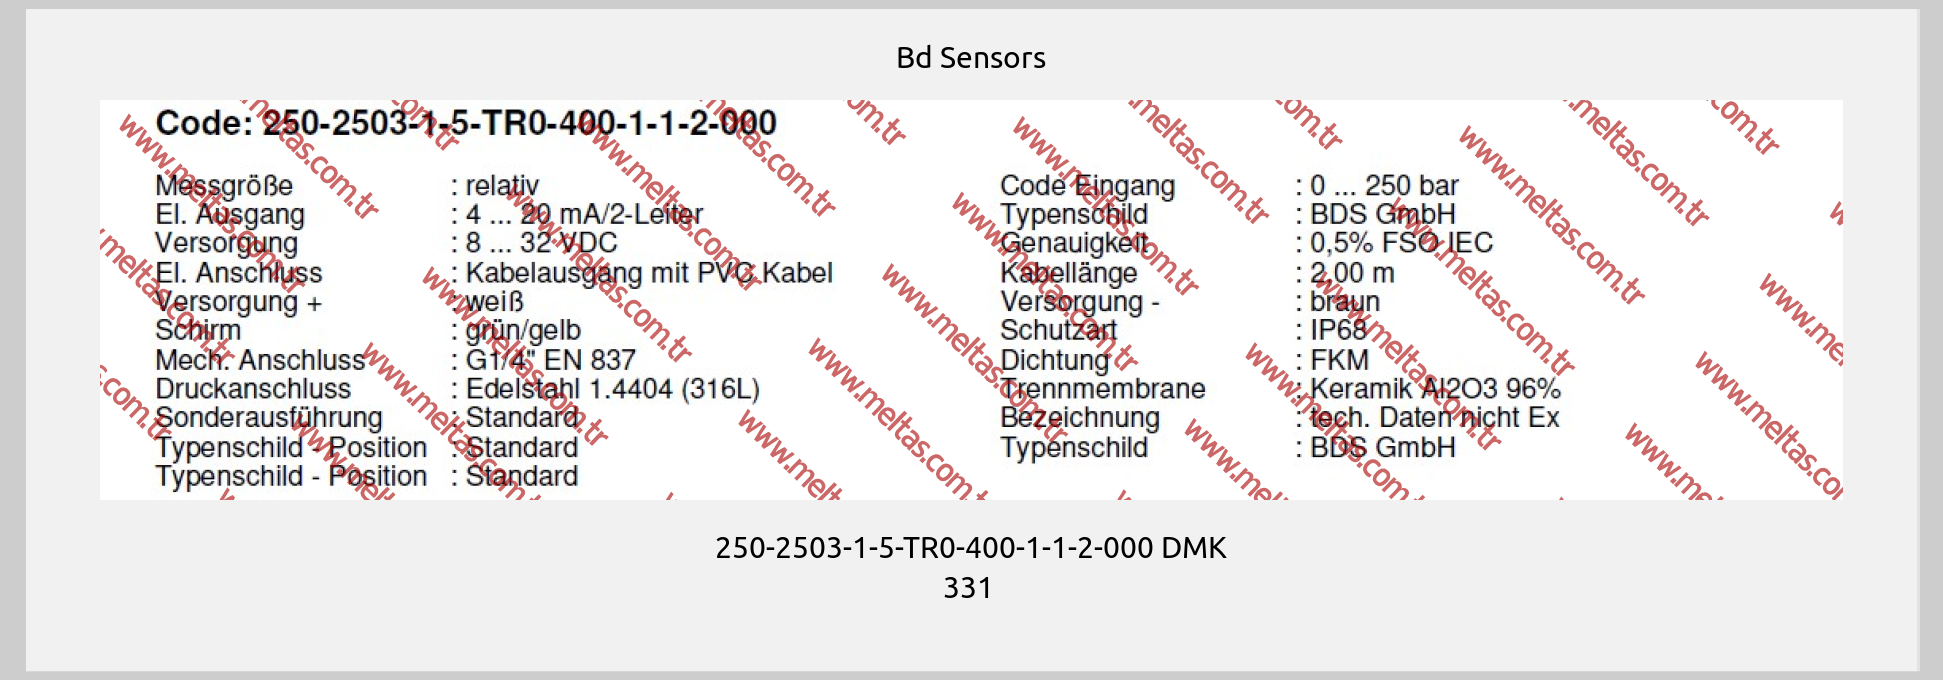 Bd Sensors - 250-2503-1-5-TR0-400-1-1-2-000 DMK 331 